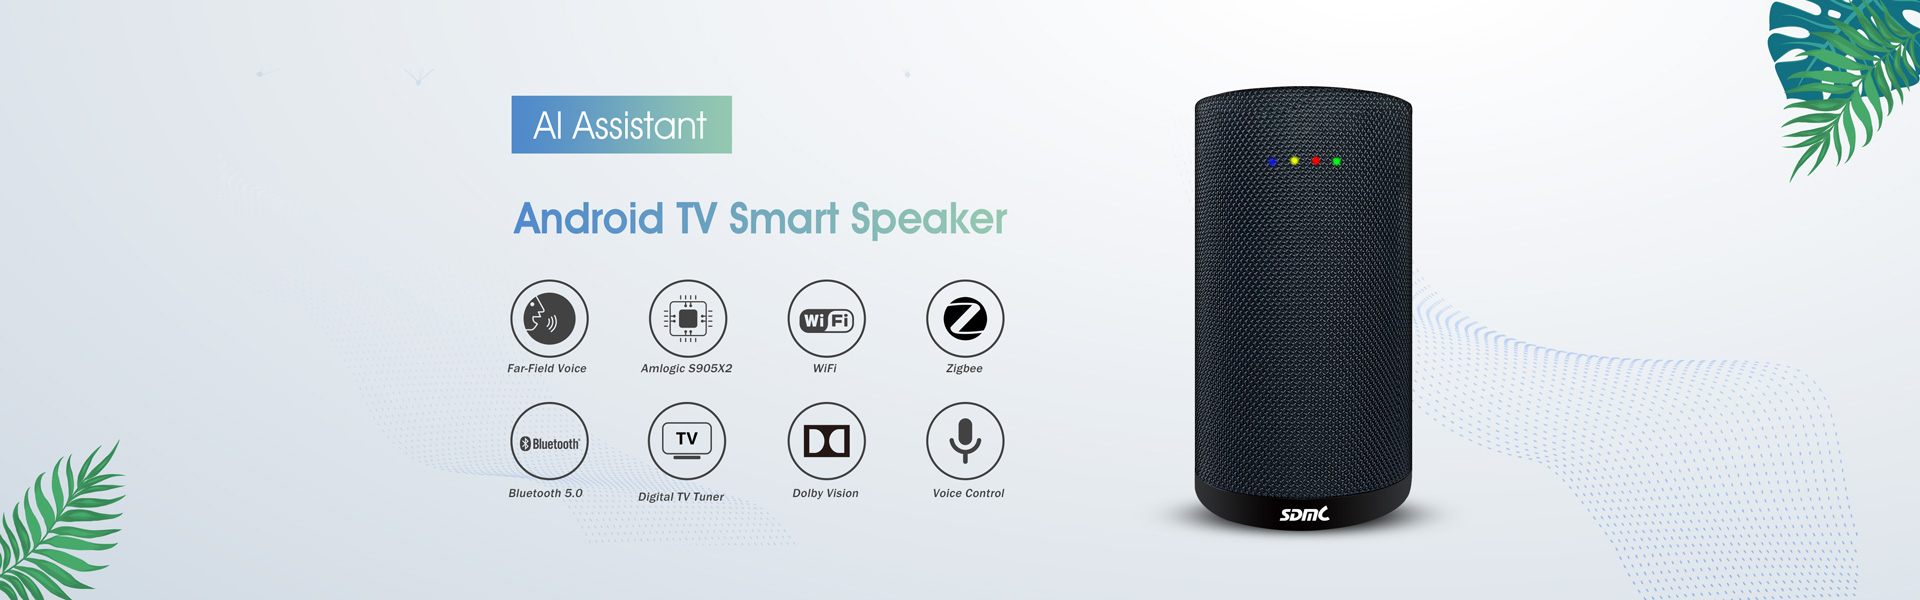 Android TV box, wifi mesh router, altoparlante intelligente,Shenzhen SDMC Technology Co.,Ltd